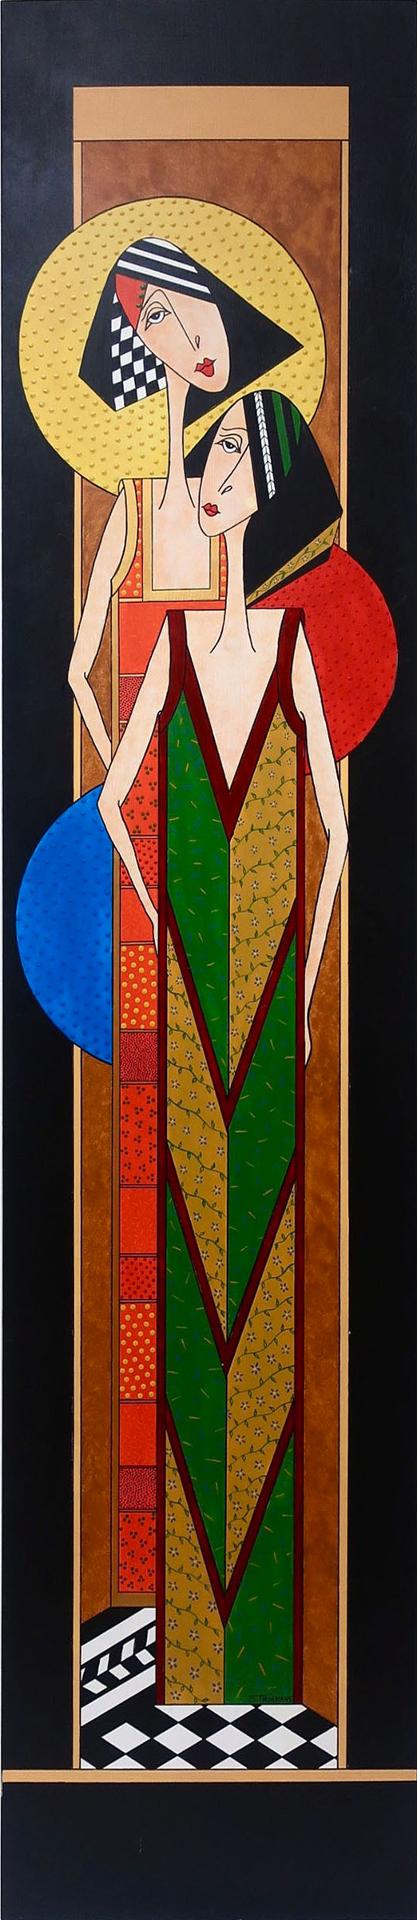 Shelia Trinkaus - Untitled (Ladies Of Art Deco)